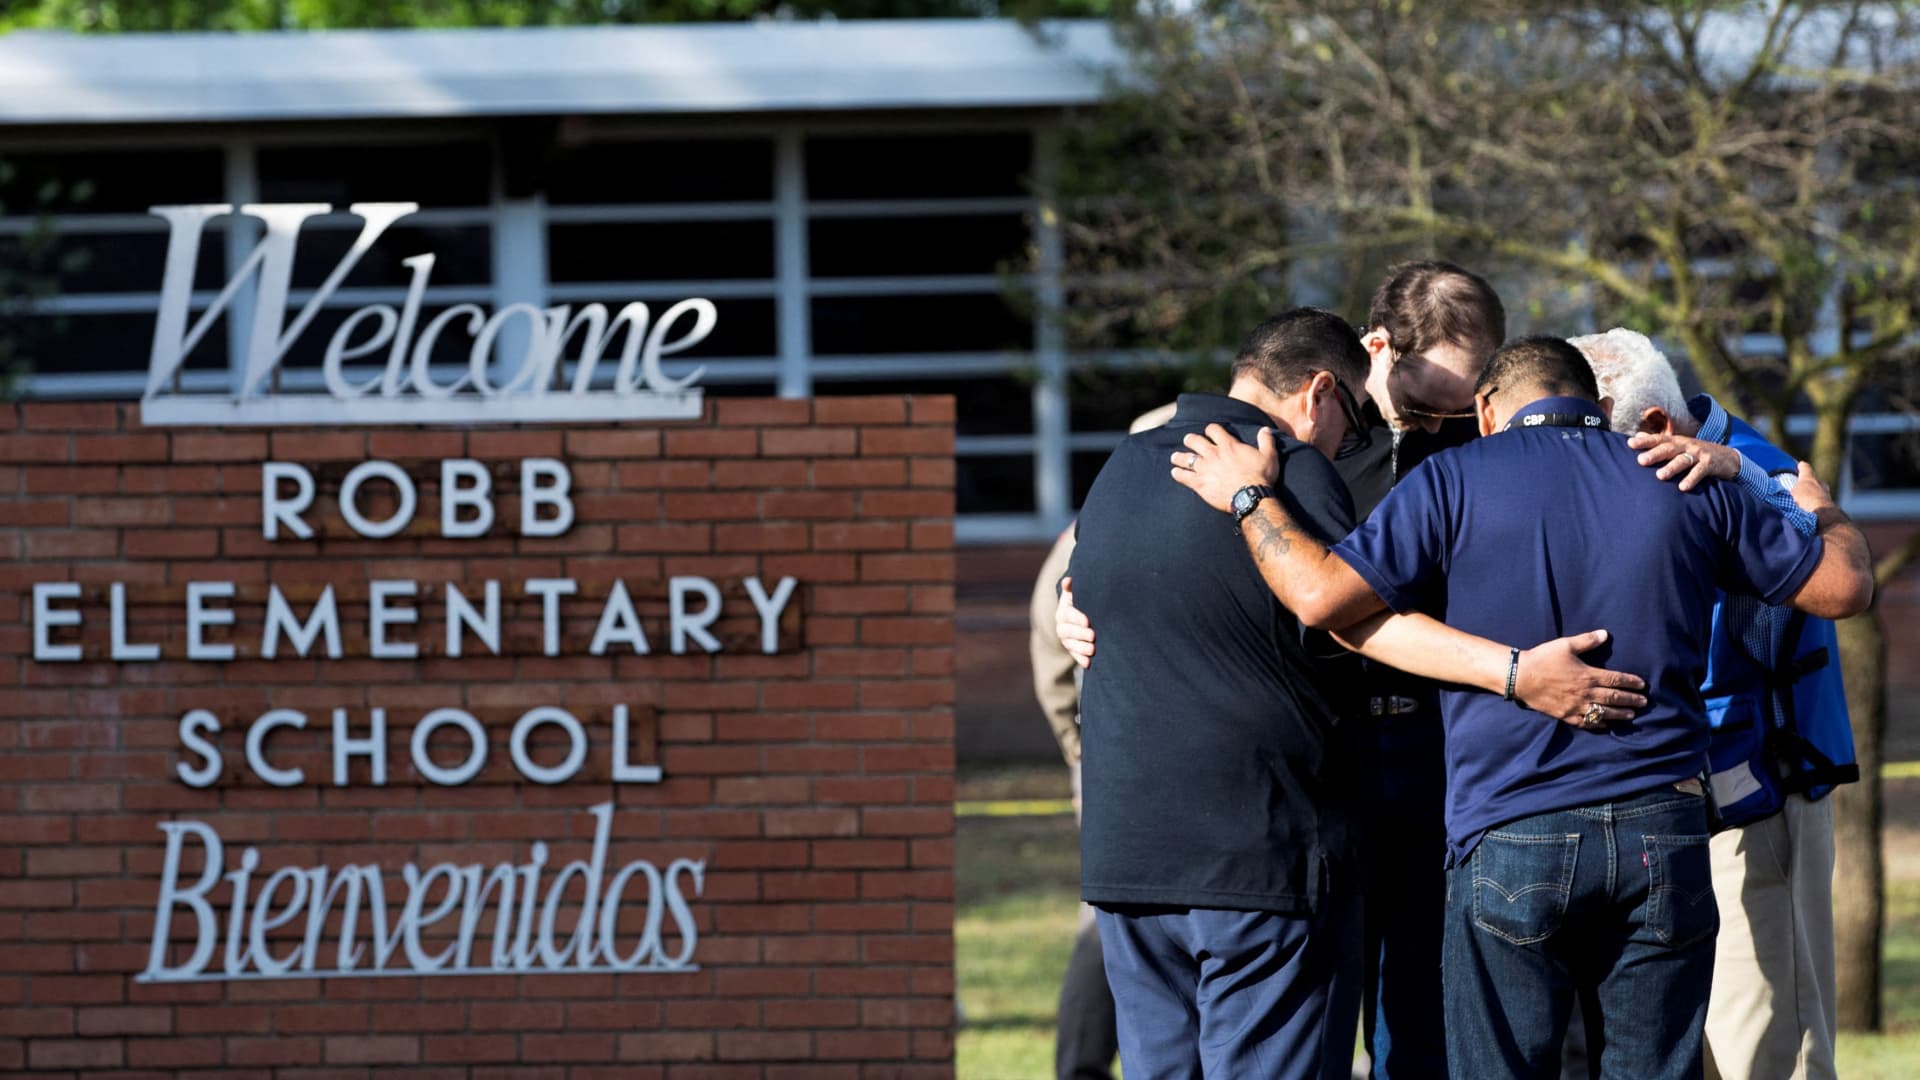 Details emerge in killing of 19 children, 2 teachers at Texas elementary school – World news